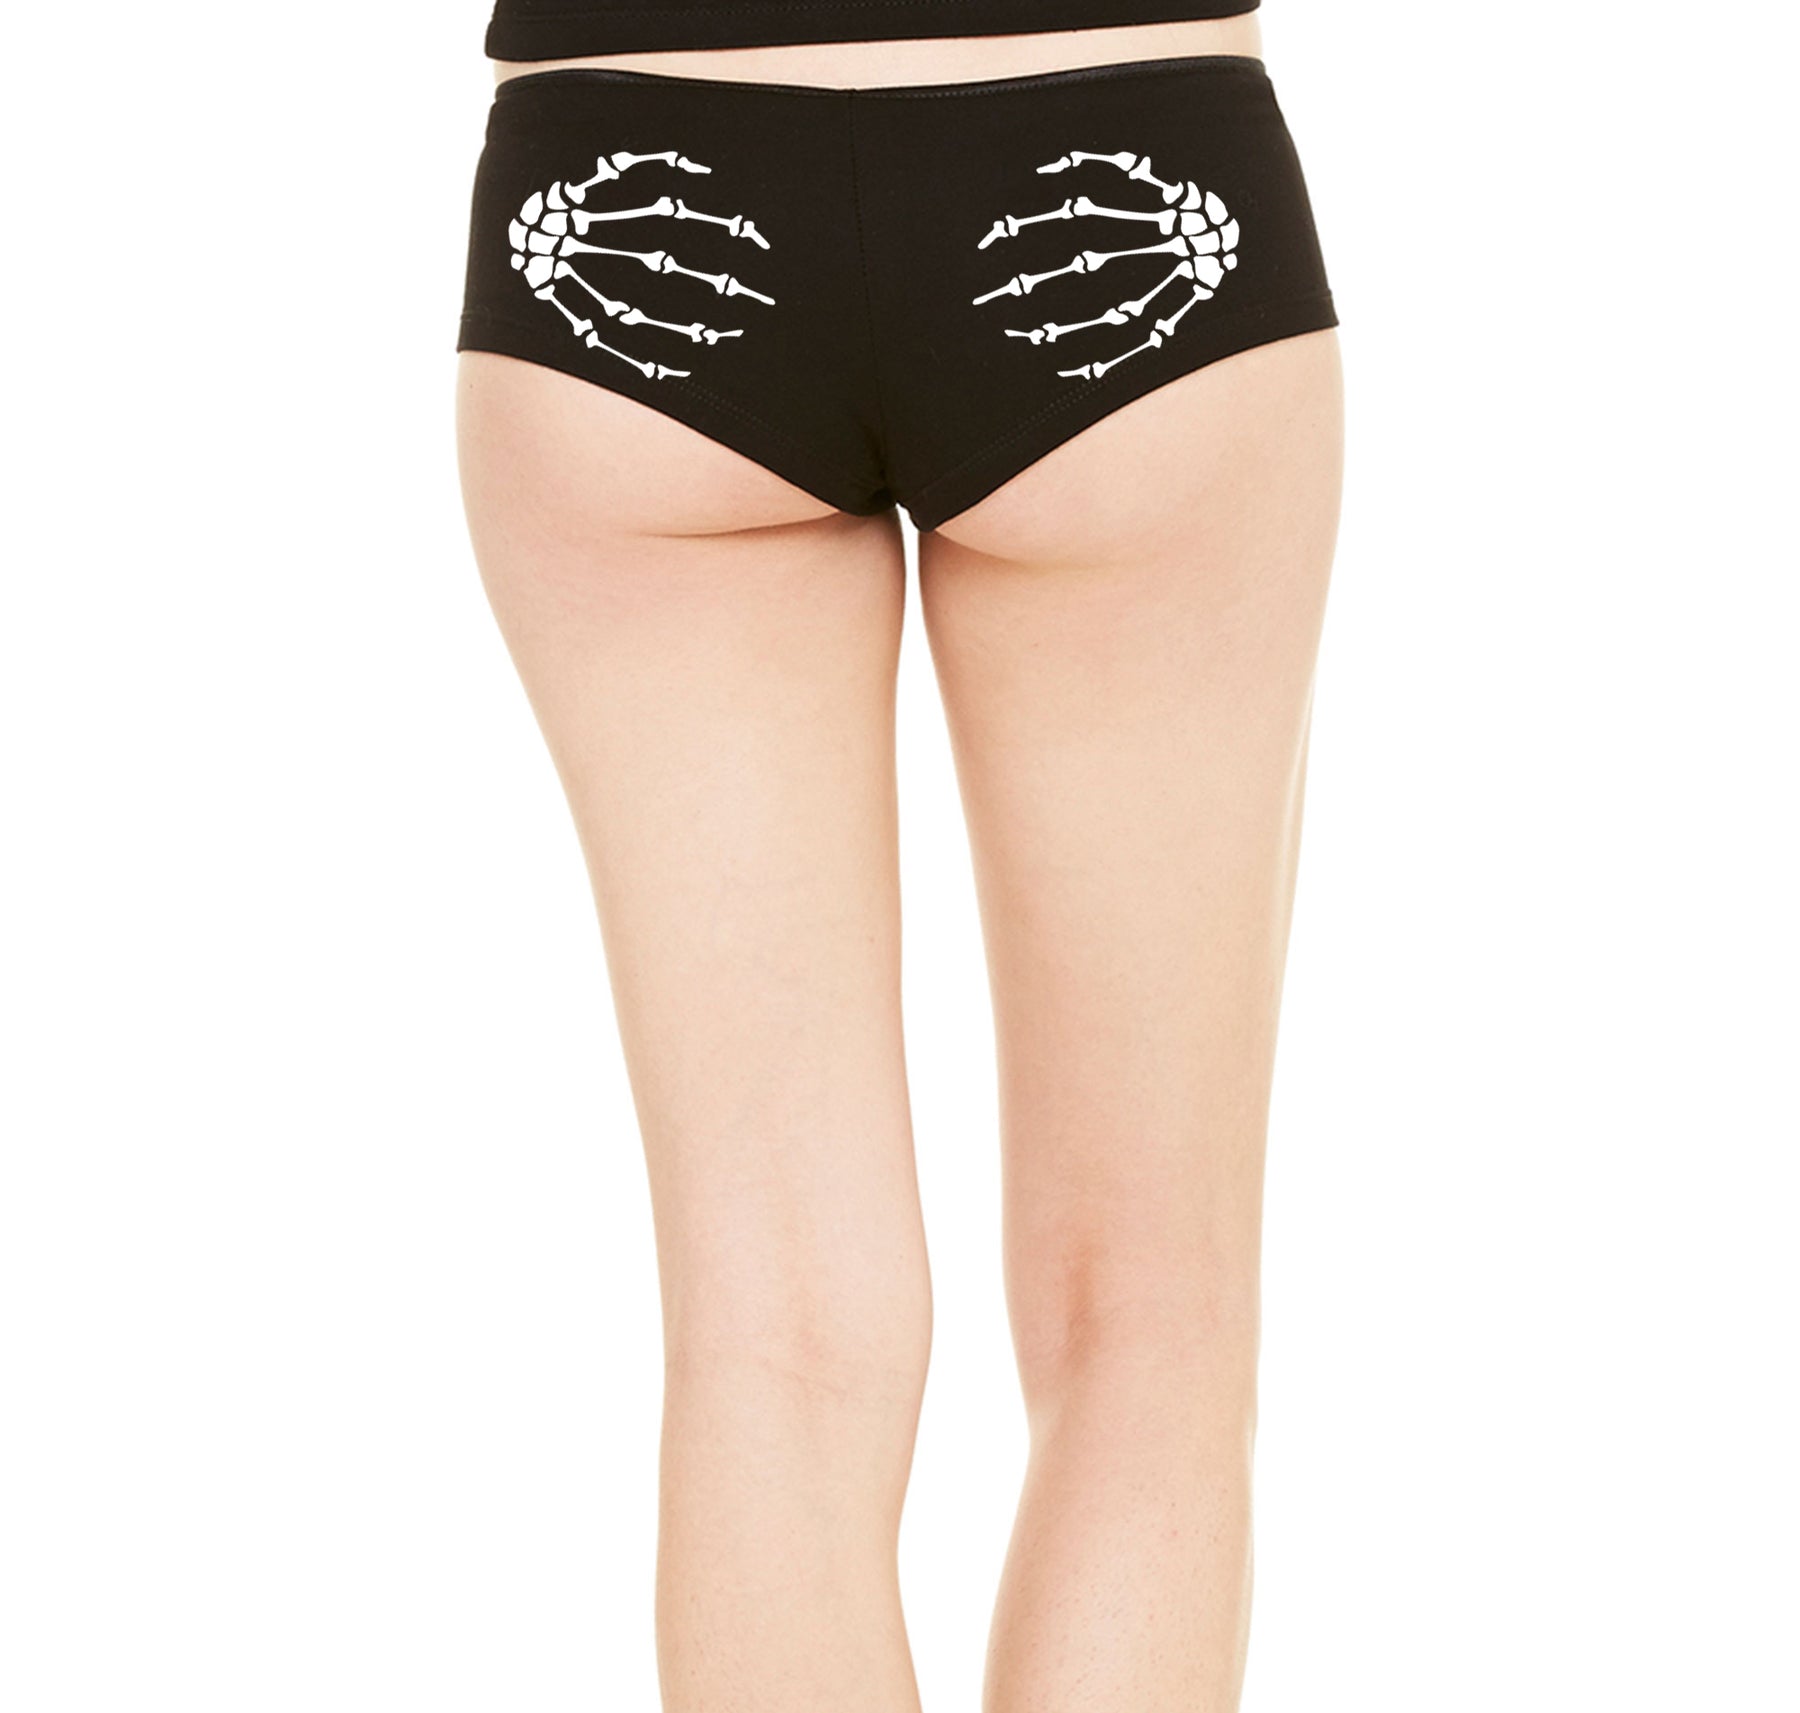 Black Skeleton Hands Booty Shorts - Spandex